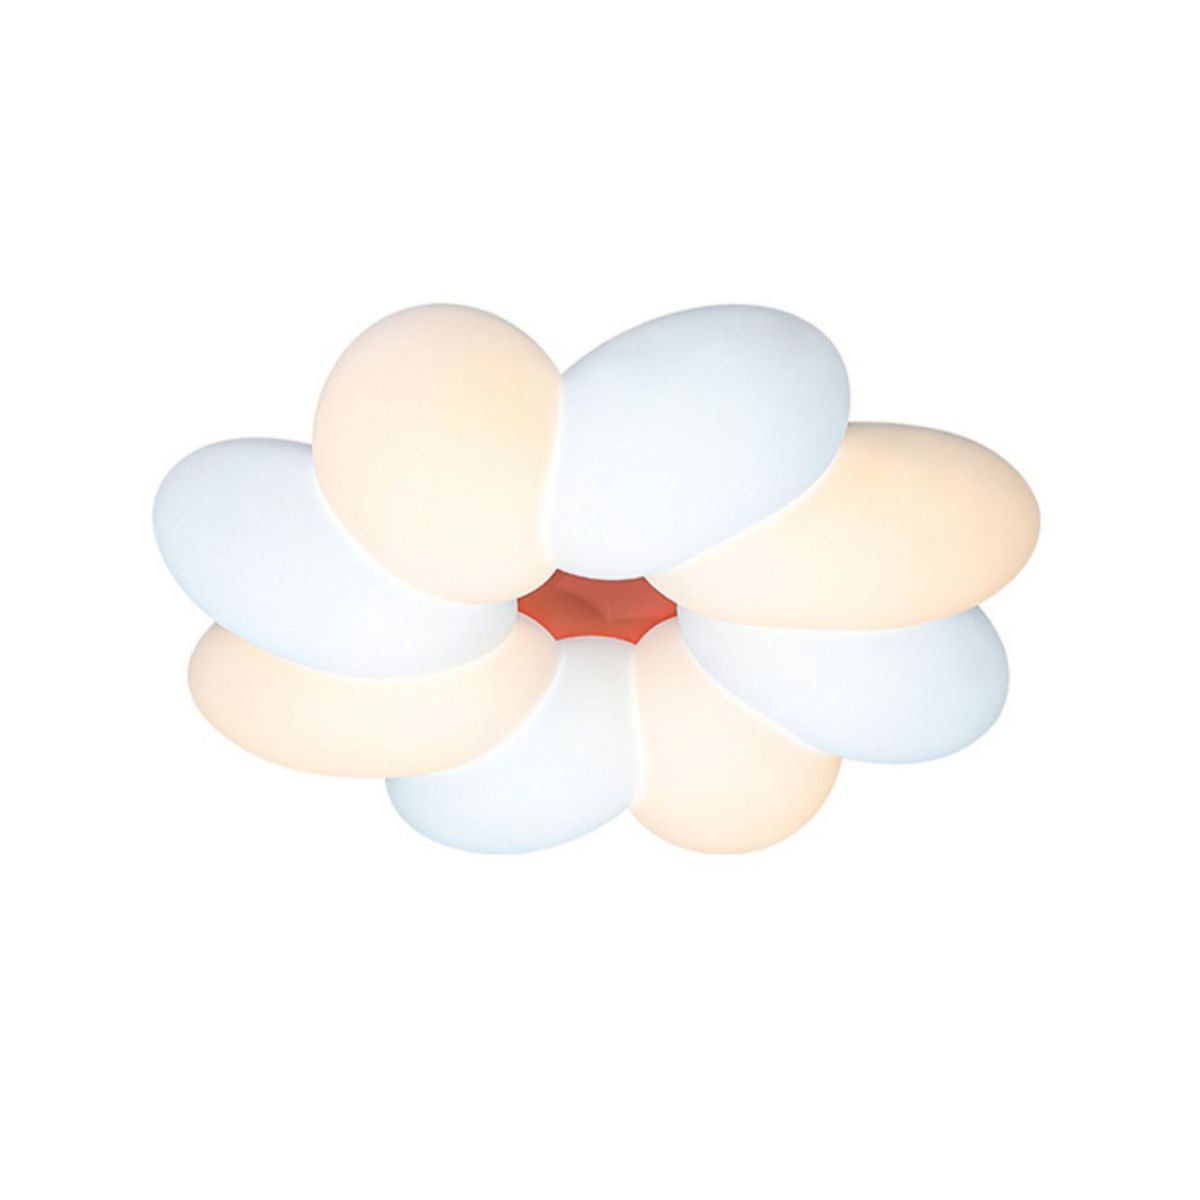 Floral Metal Ceiling Lighting Minimalist Style LED Ceiling Lamp